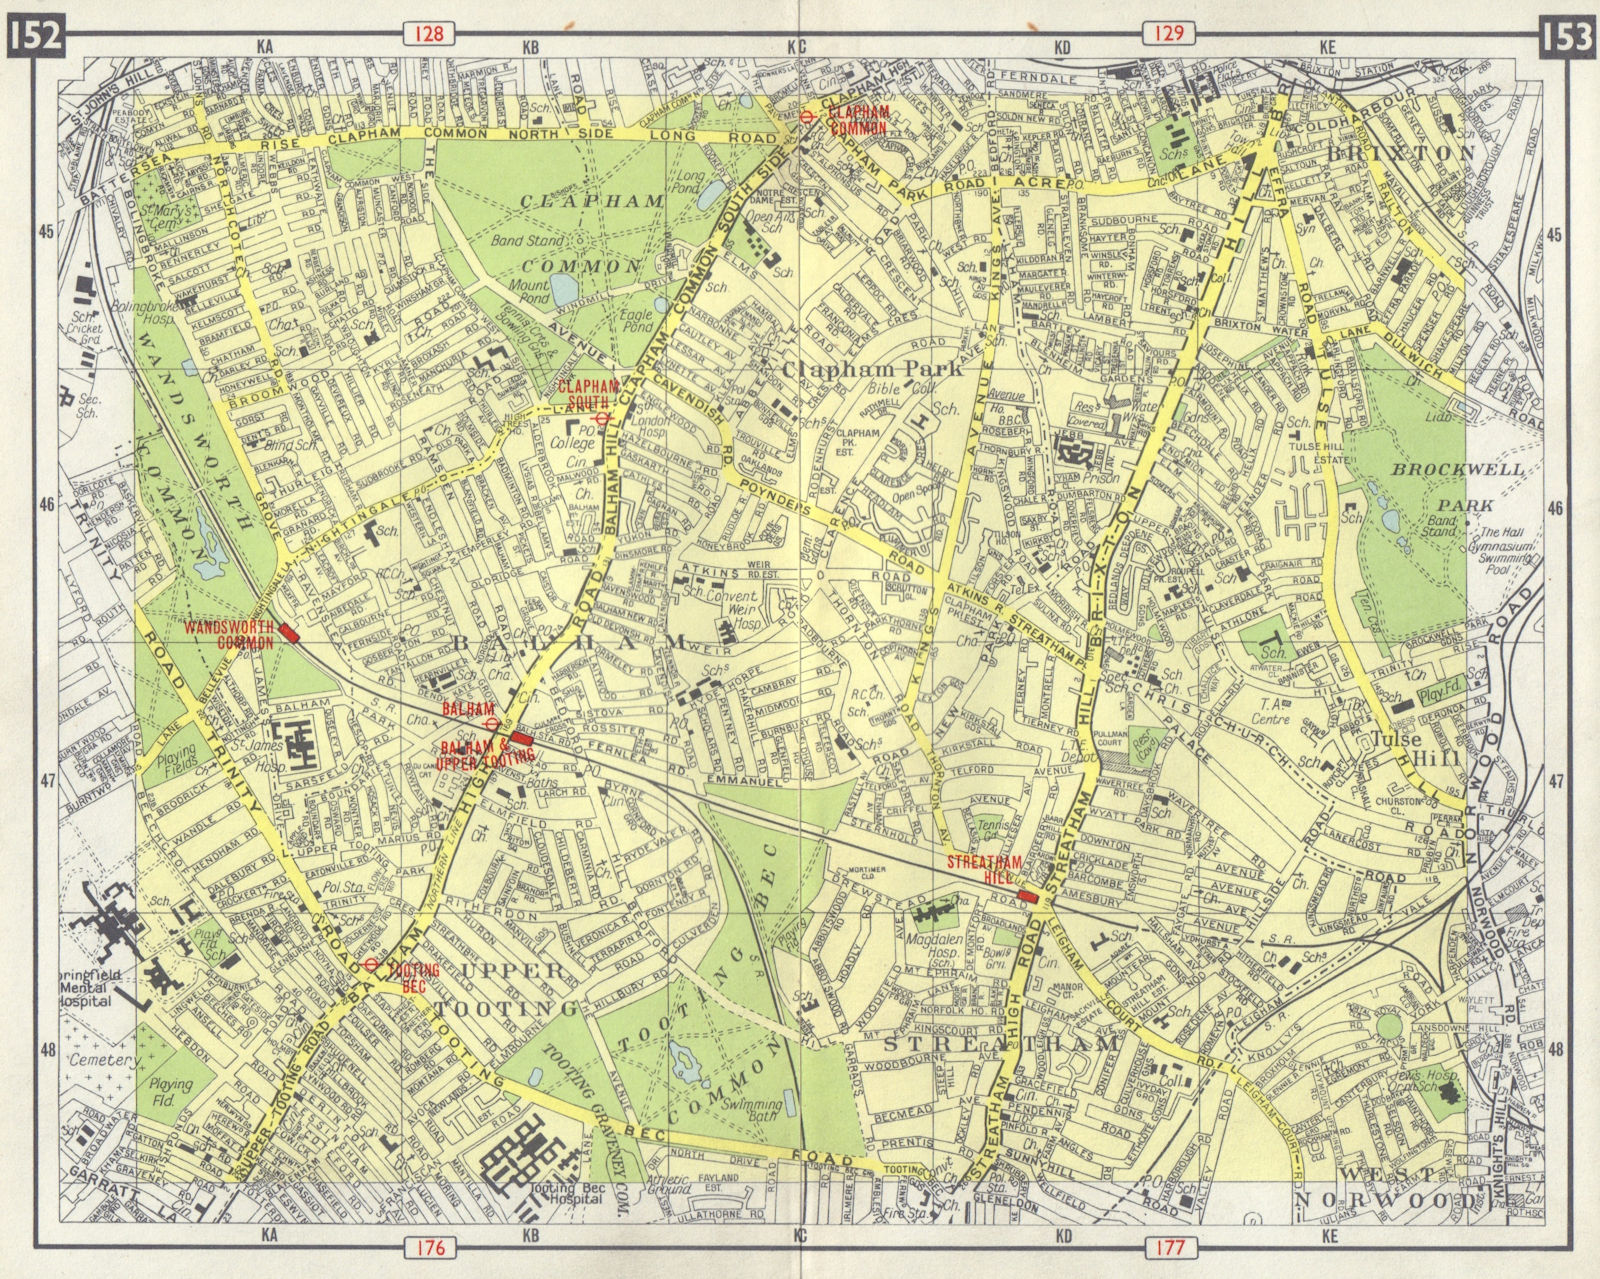 S LONDON Tooting Bec Streatham Balham Brixton Clapham Wandsworth Cmn 1965 map